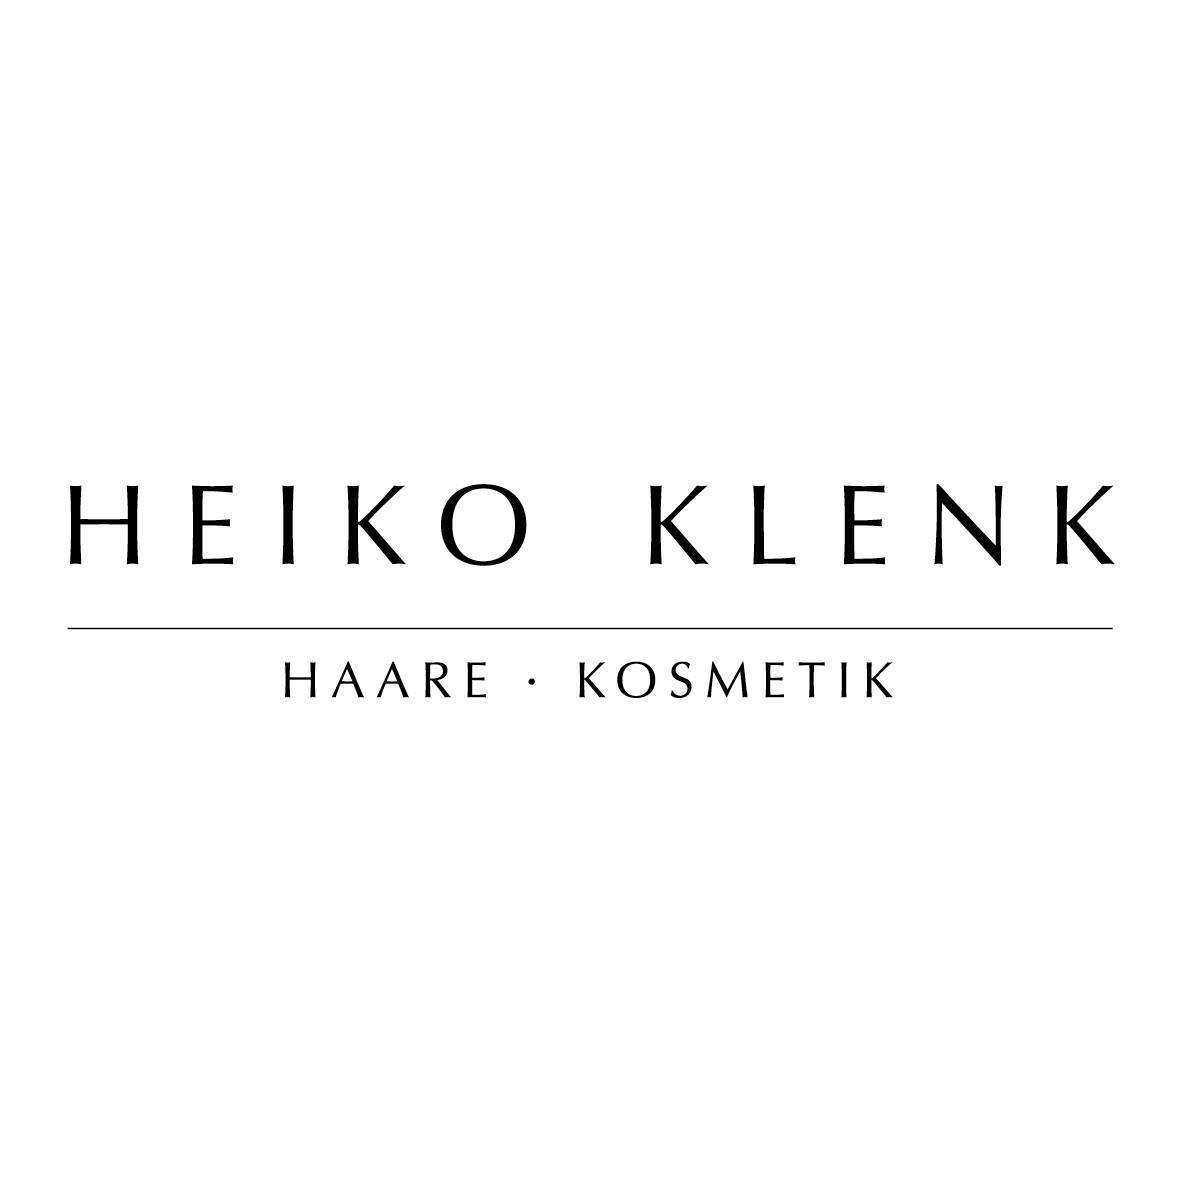 Logo von HEIKO KLENK Haare | Kosmetik | Friseur in Neckarsulm & Umgebung